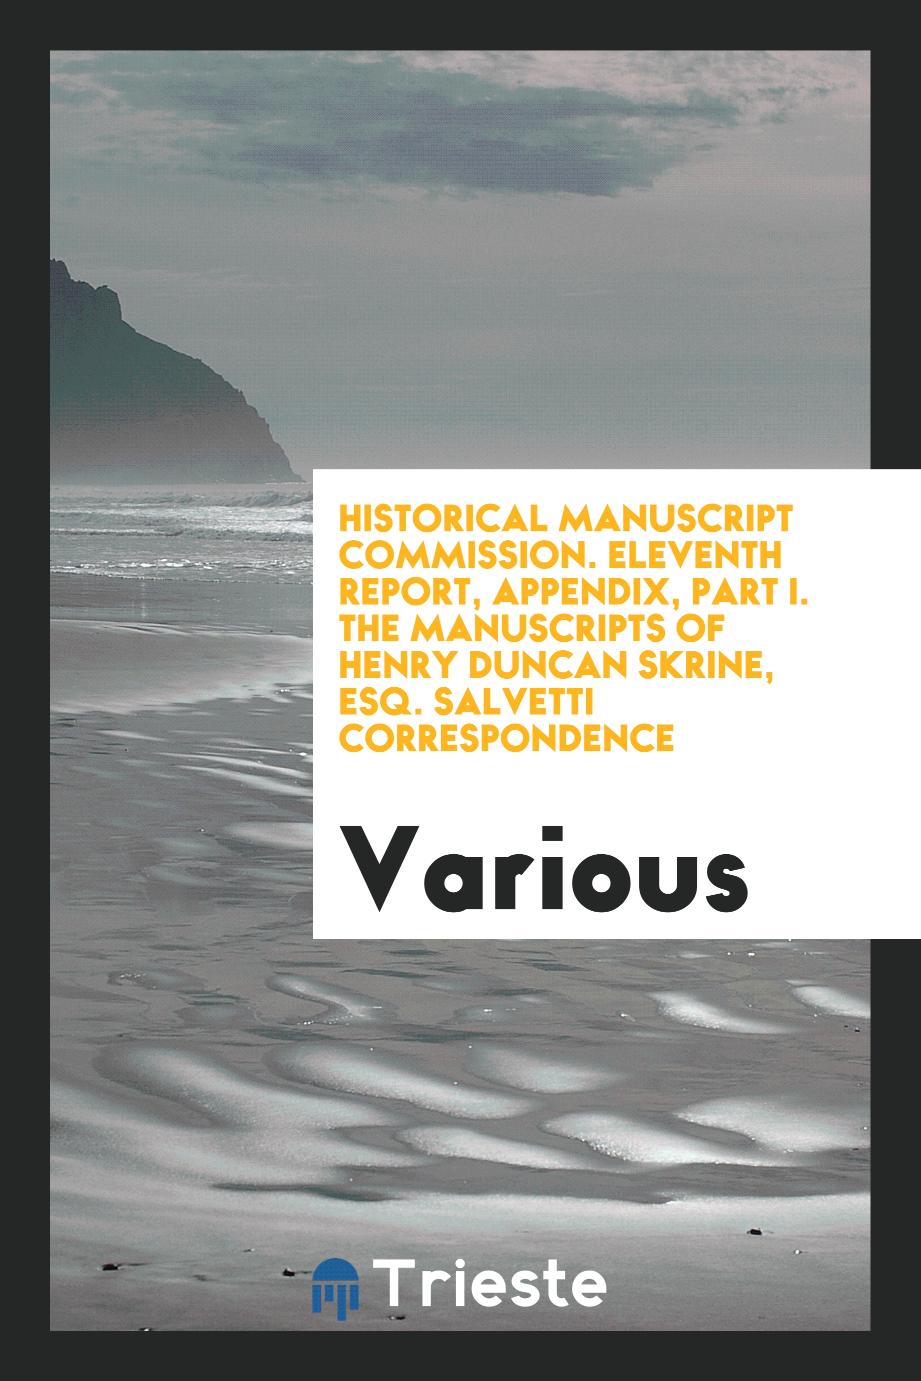 Historical Manuscript Commission. Eleventh Report, Appendix, Part I. The Manuscripts of Henry Duncan Skrine, Esq. Salvetti Correspondence